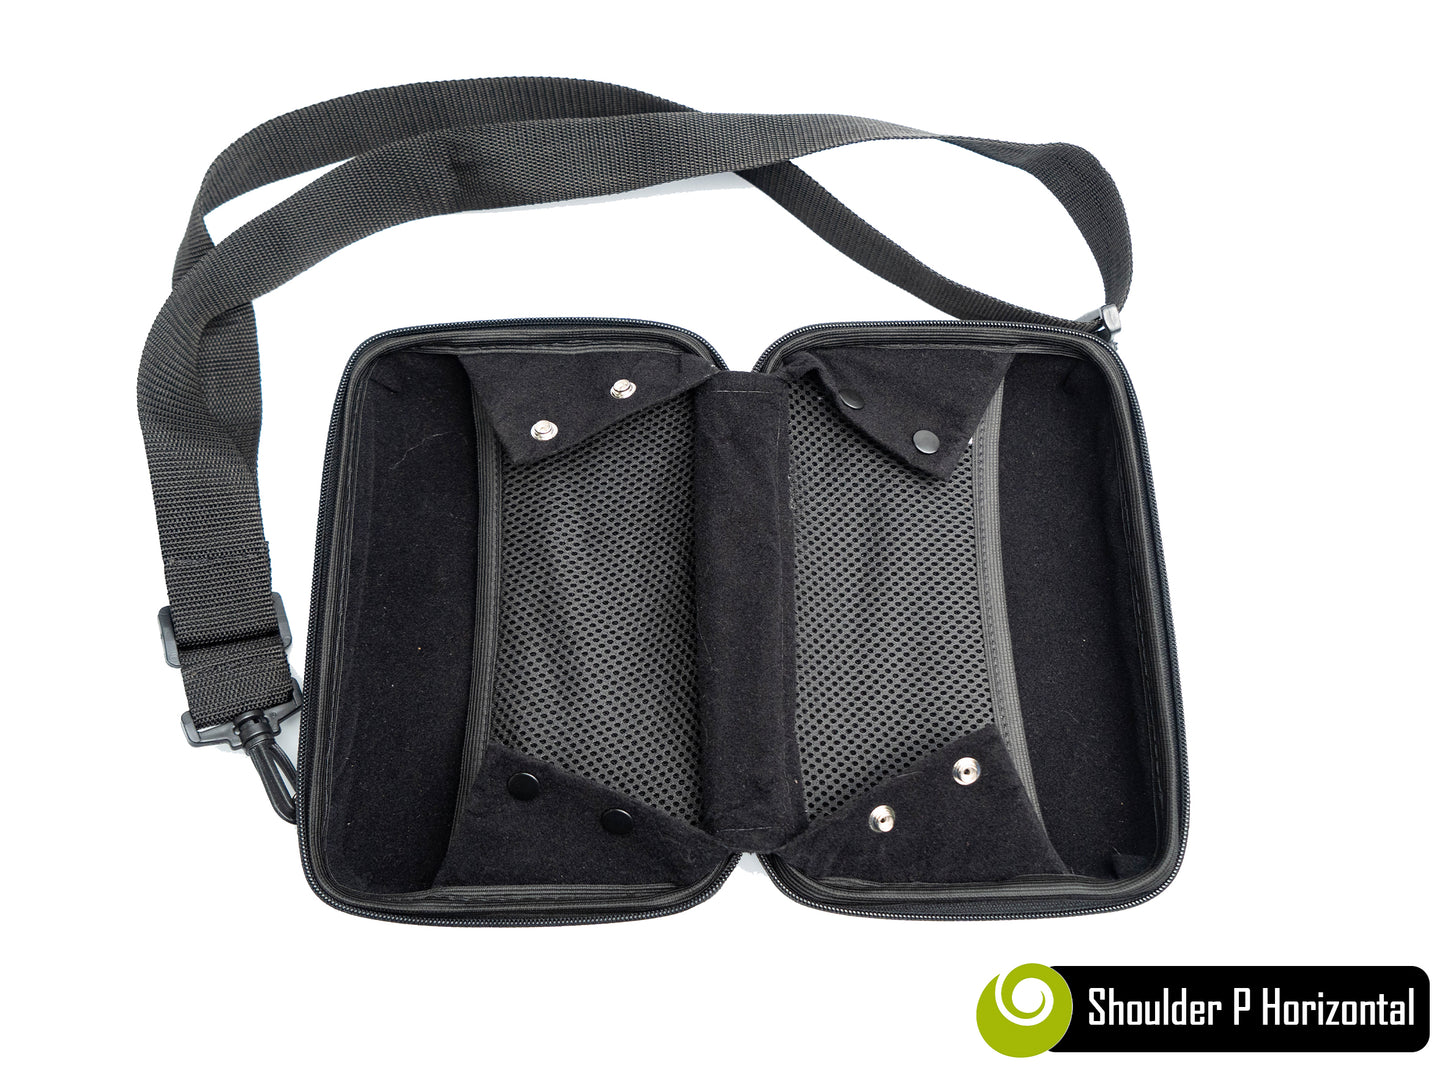 Bolsa Shoulder Bag Batman P Horizontal - Pochete Slim Kameleon